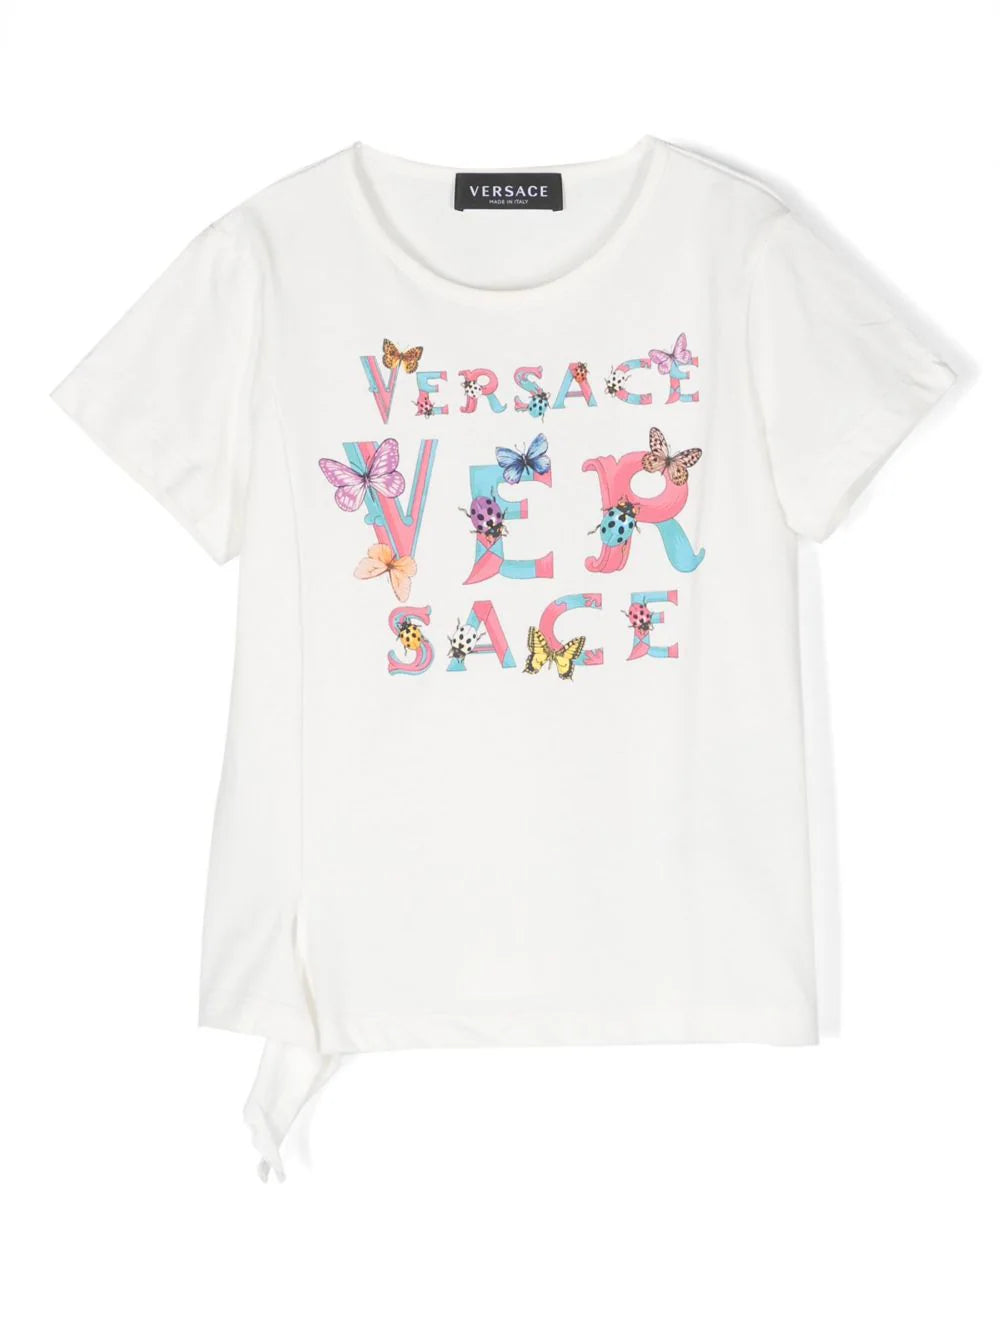 VERSACE KIDS Butterfly Logo Print T-Shirt White/Multi - MAISONDEFASHION.COM